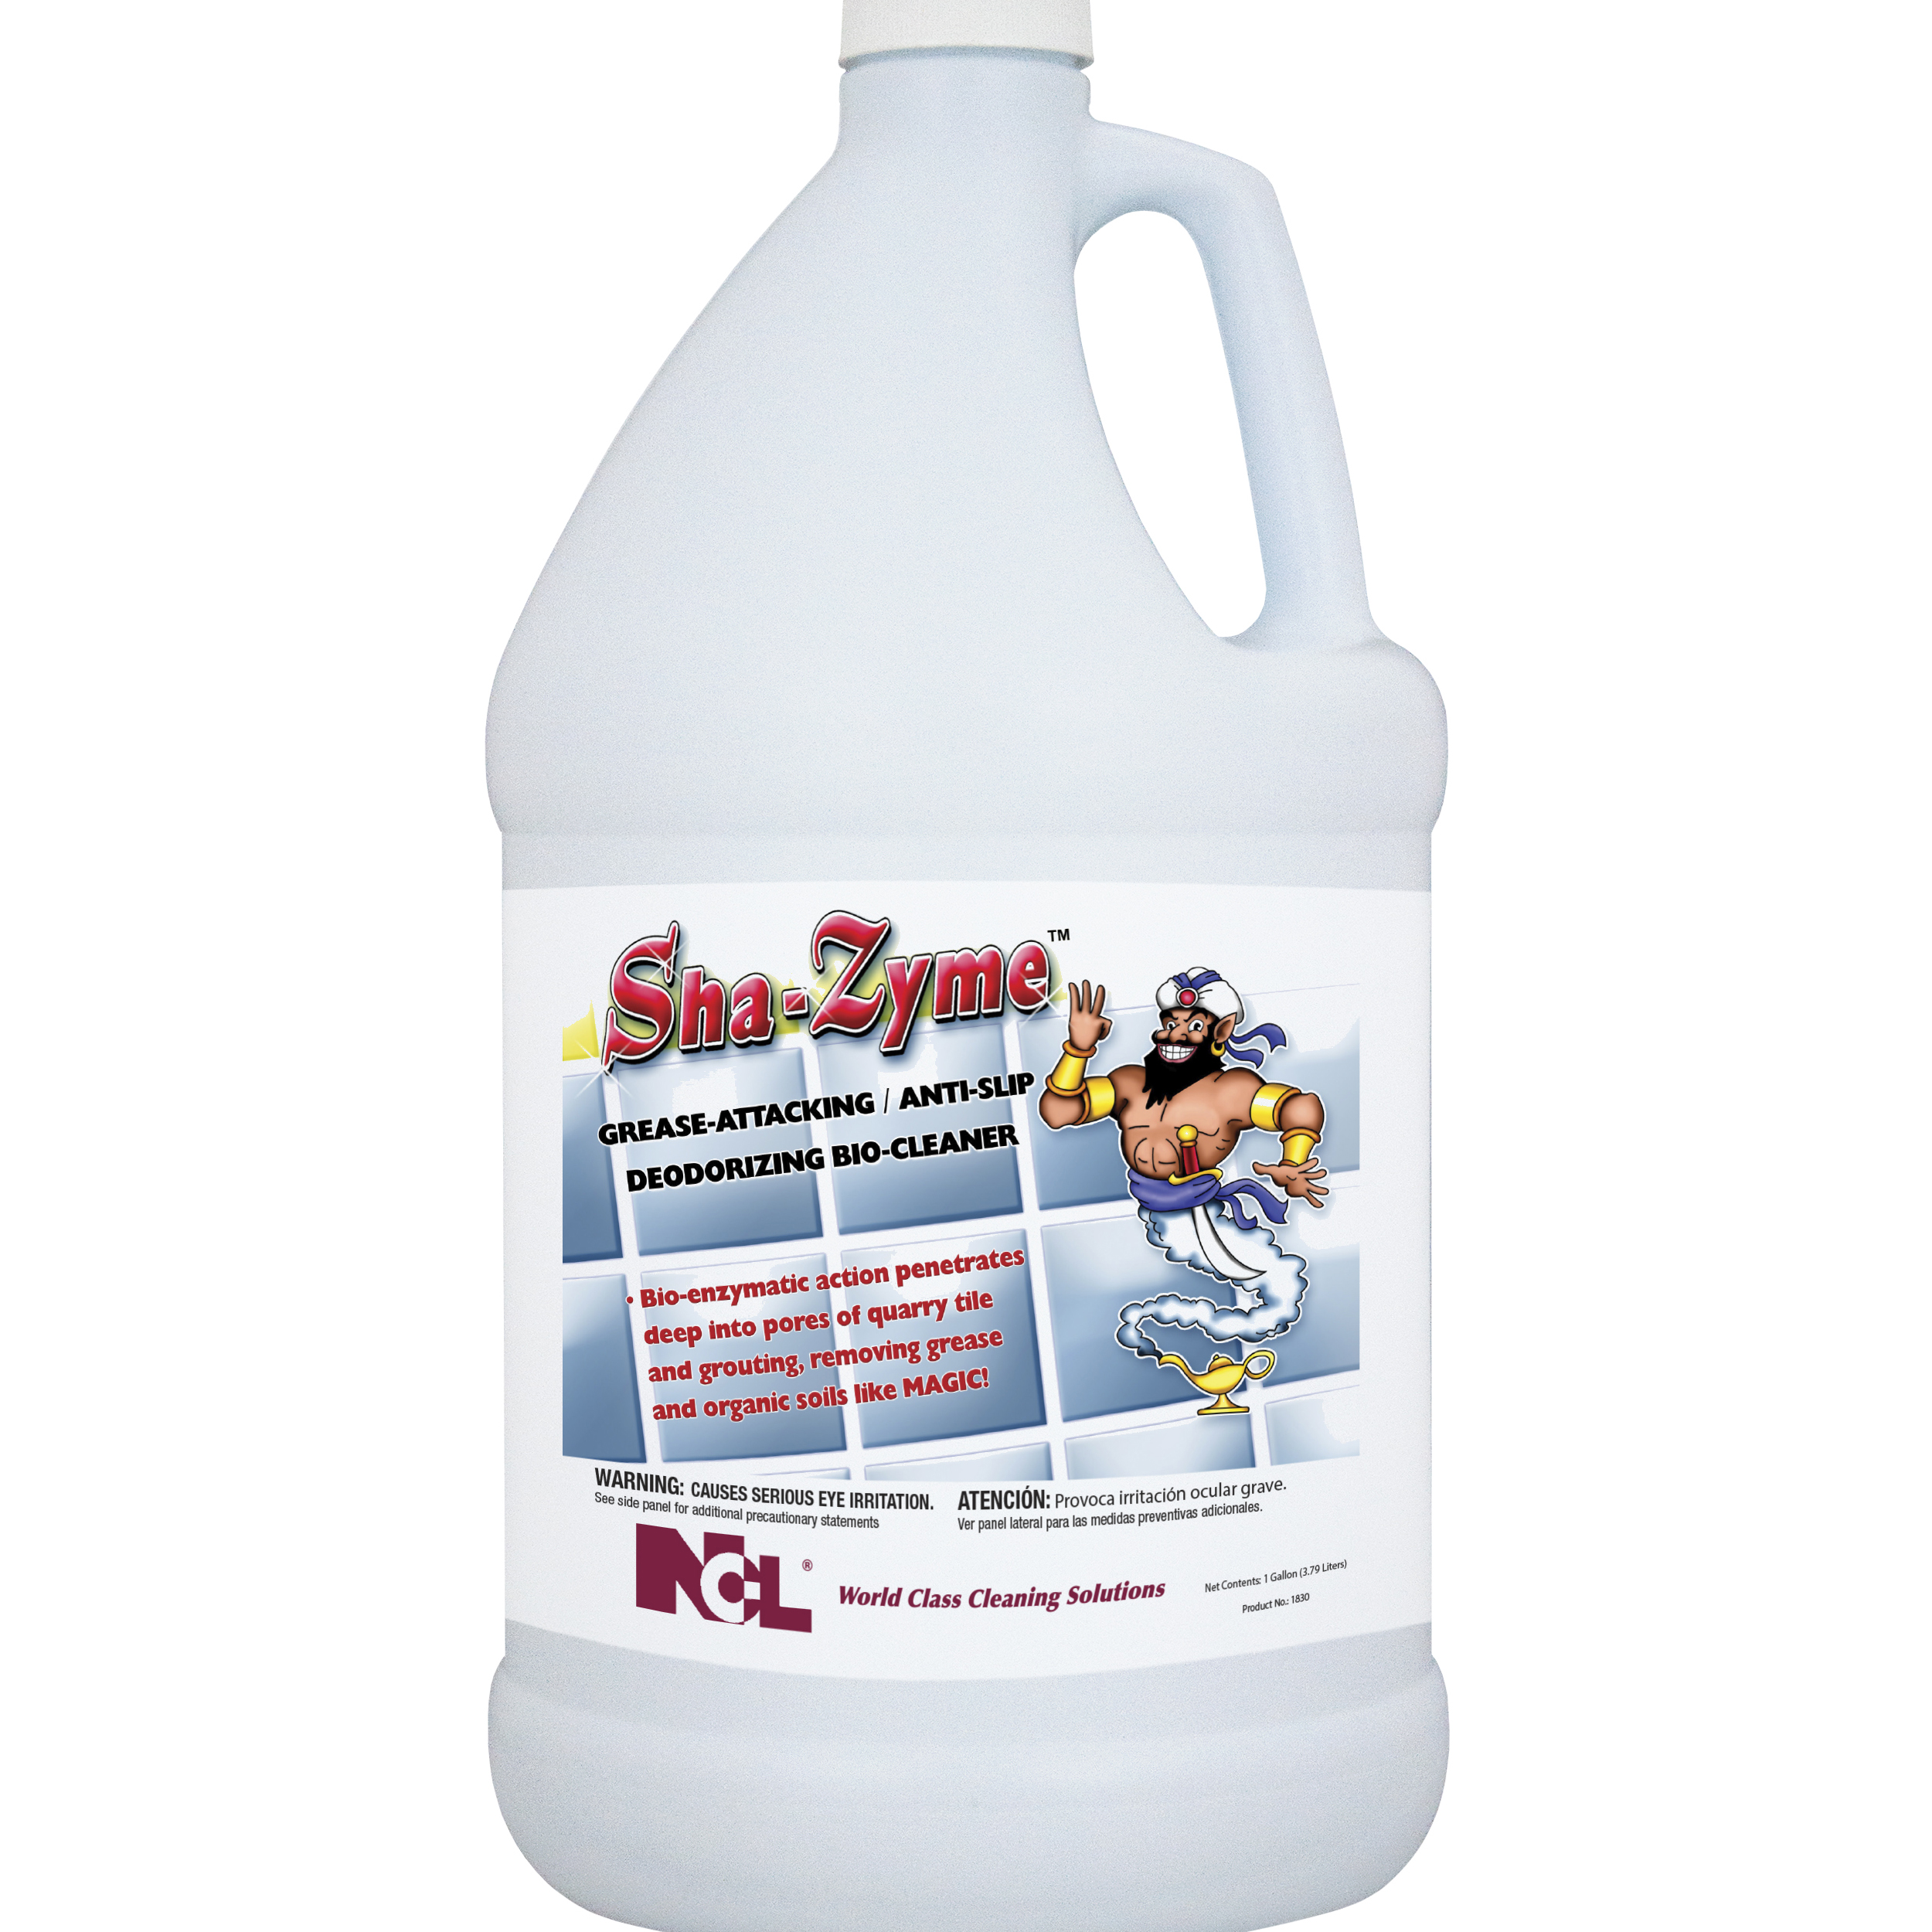  SHA-ZYME Grease Attacking / Anti-Slip / Deodorizing Bio-Cleaner 4/1 Gal. Case (NCL1830-29) 